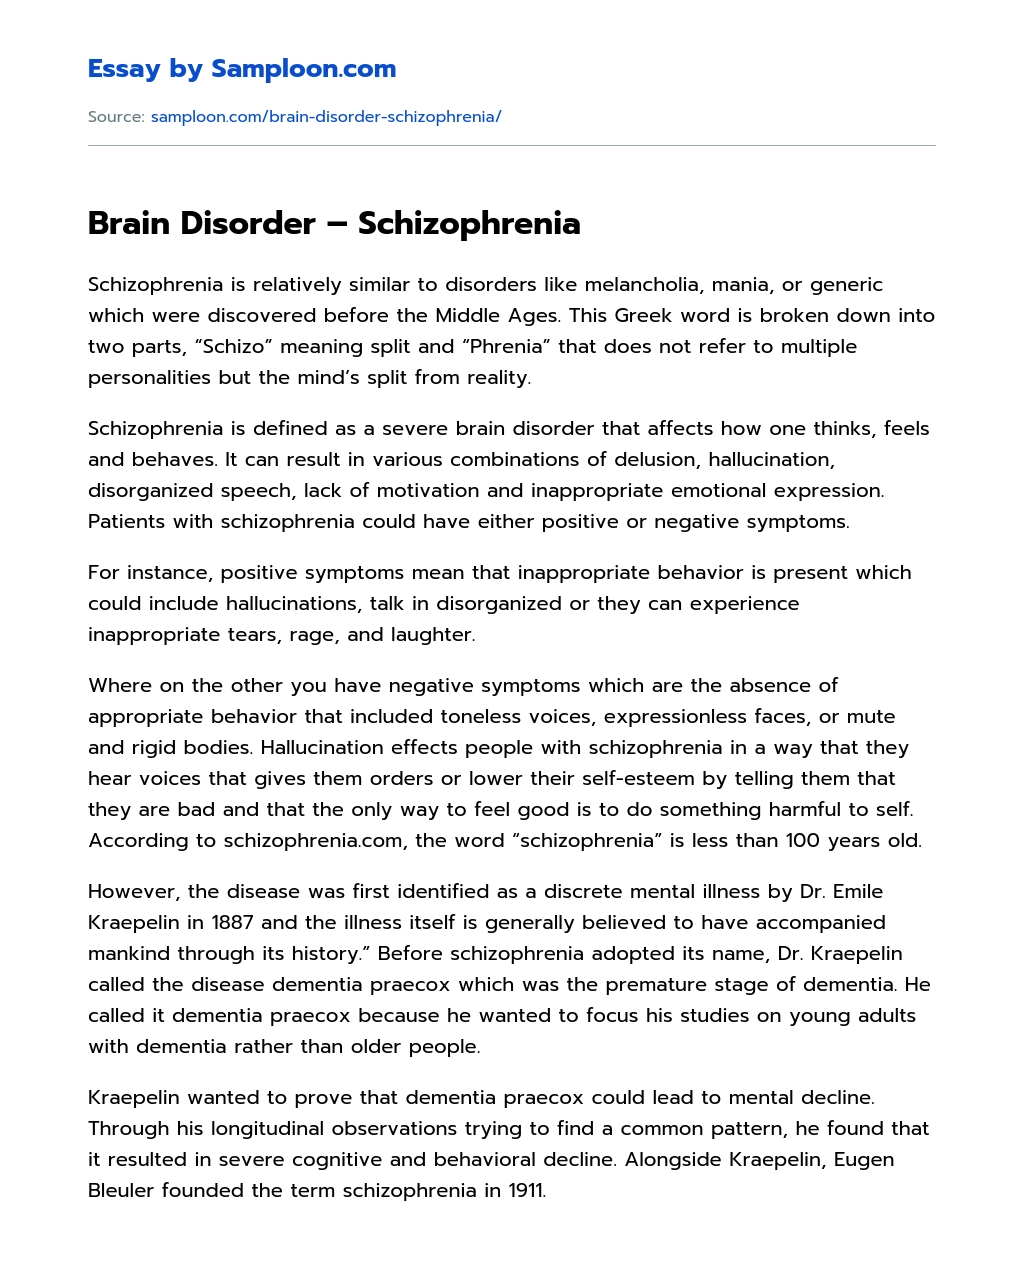 Brain Disorder – Schizophrenia essay